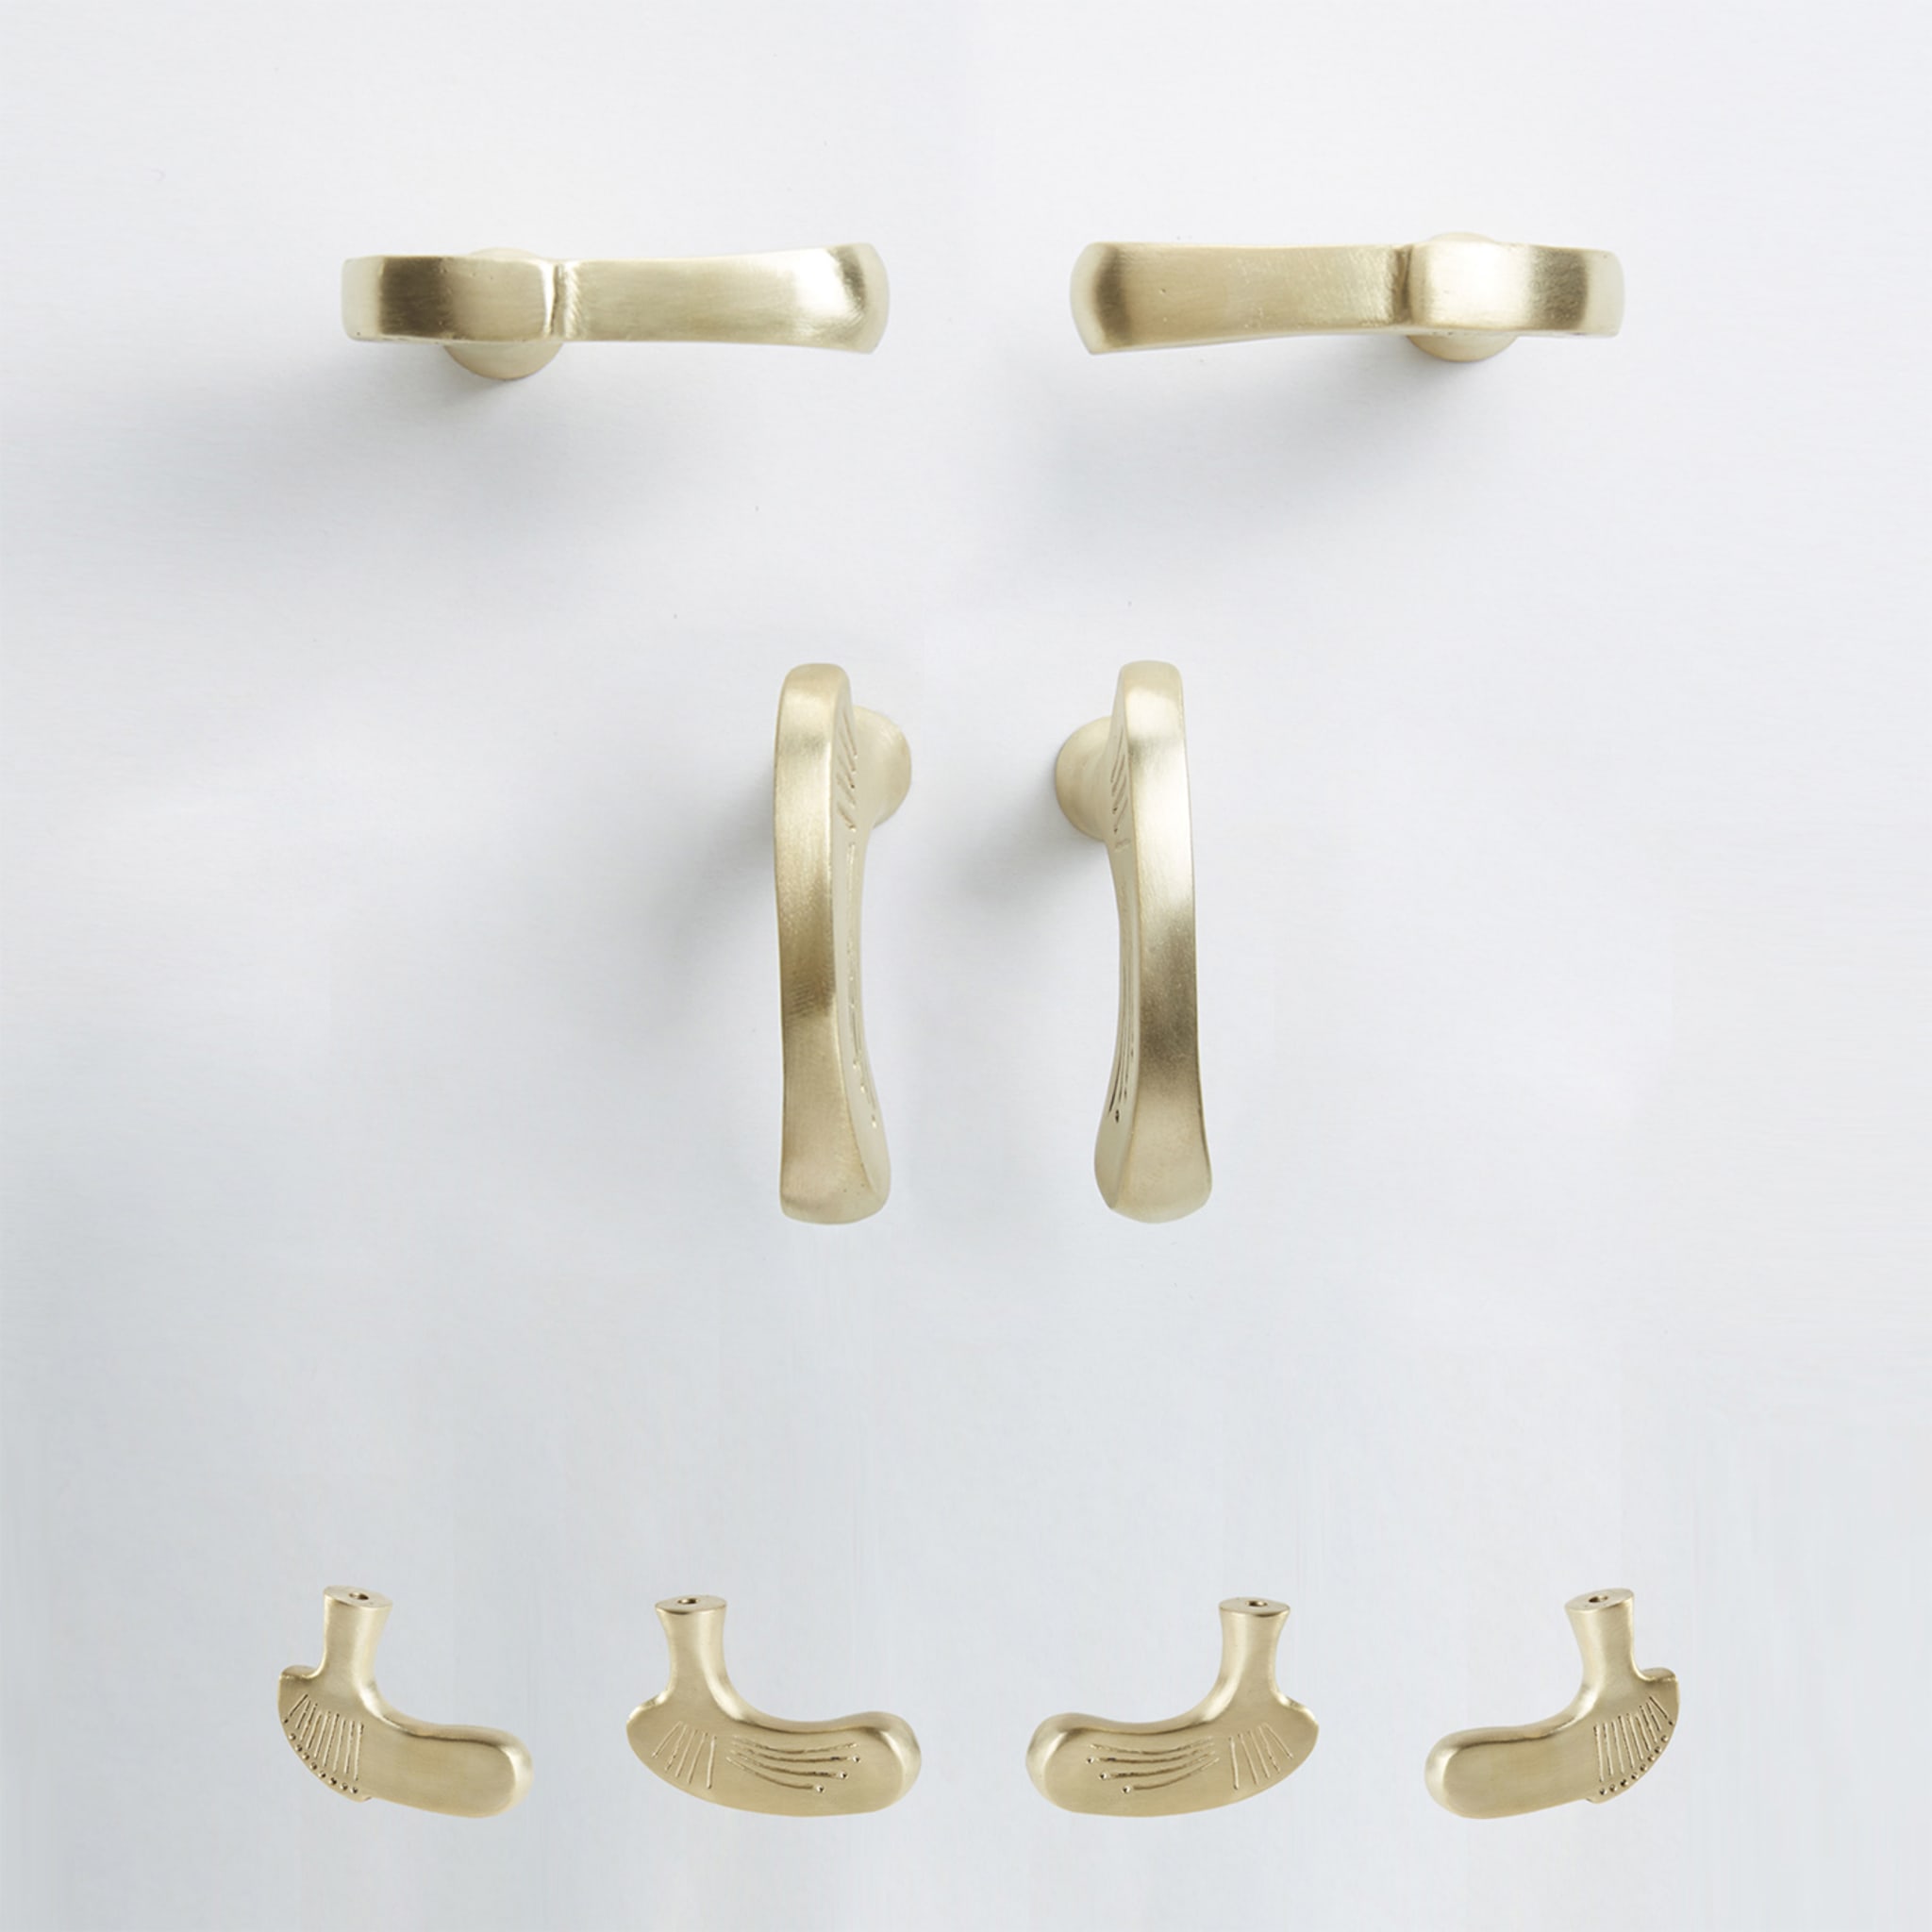 Inca Evolution Set of 4 Brass Door Knobs #2 by Nicole Valenti - Alternative view 1